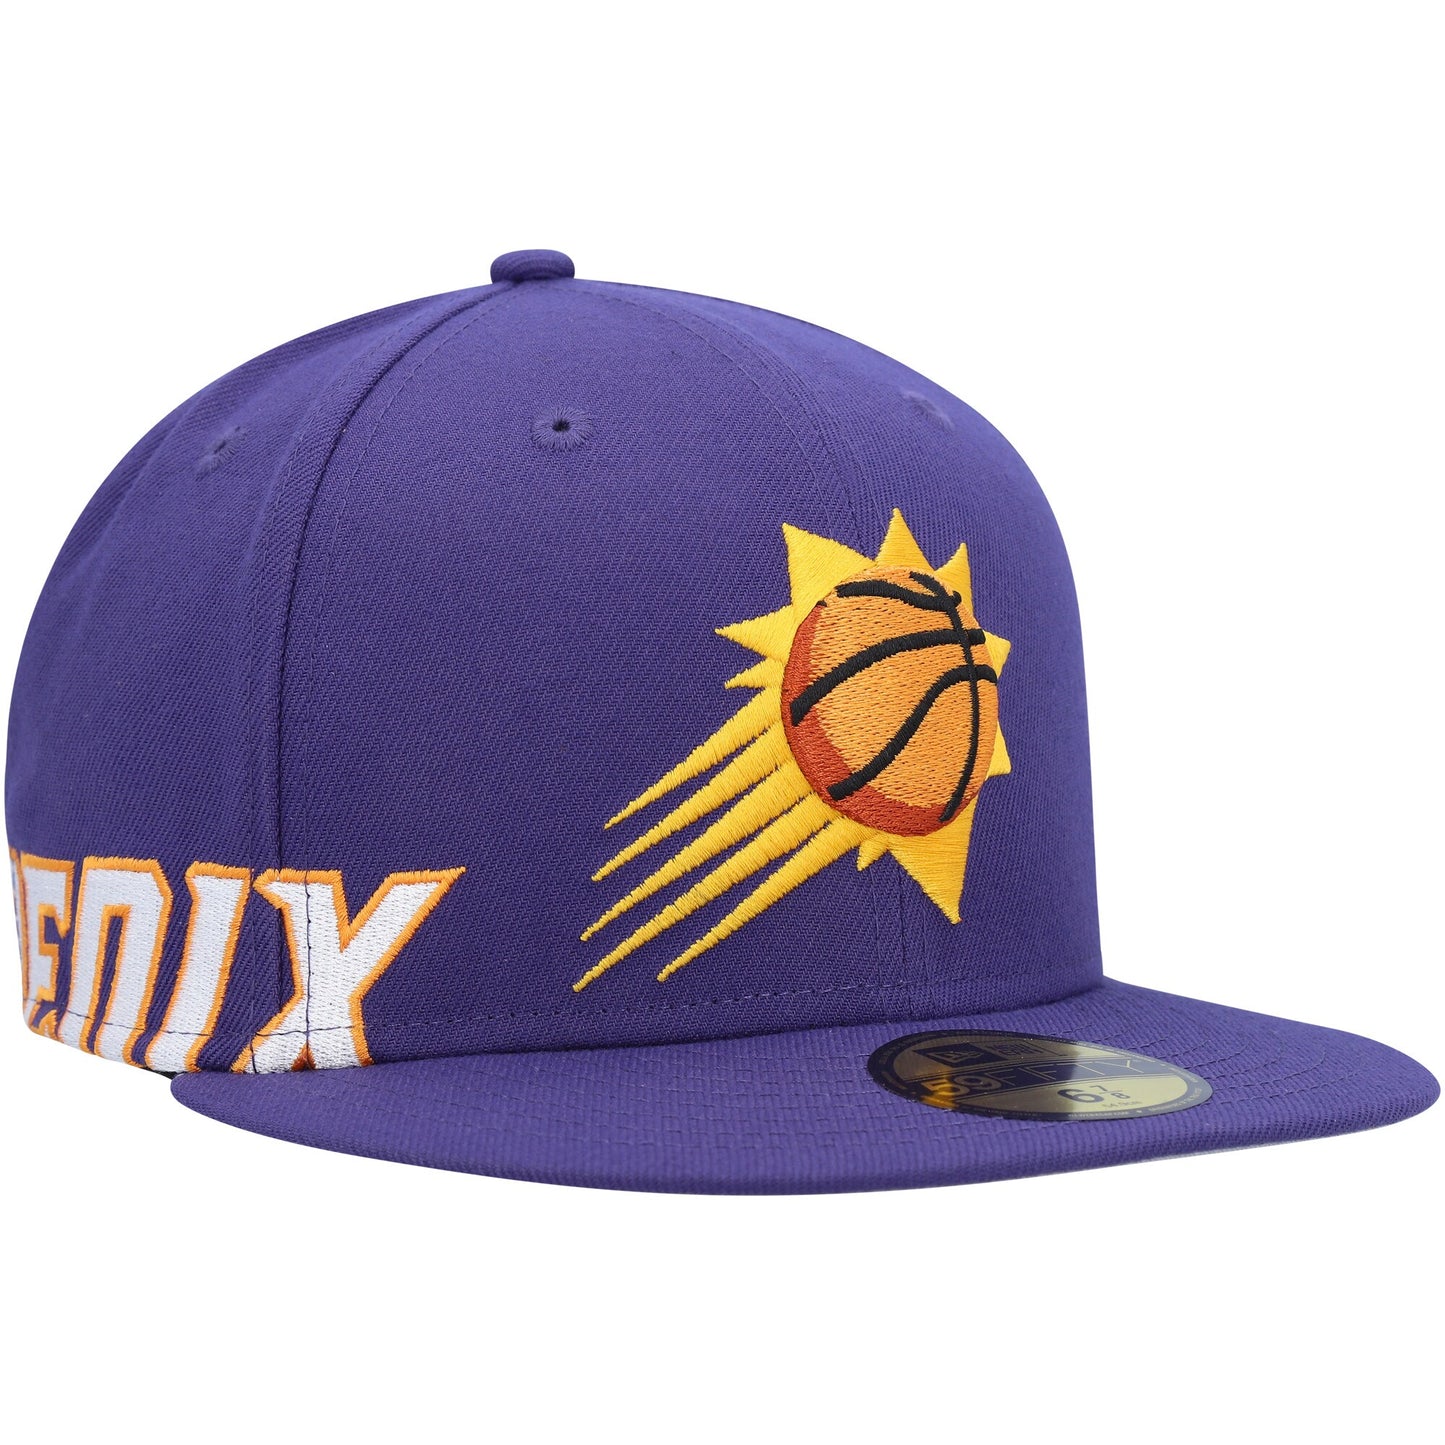 Phoenix Suns New Era Side Arch Jumbo 59FIFTY Fitted Hat - Purple